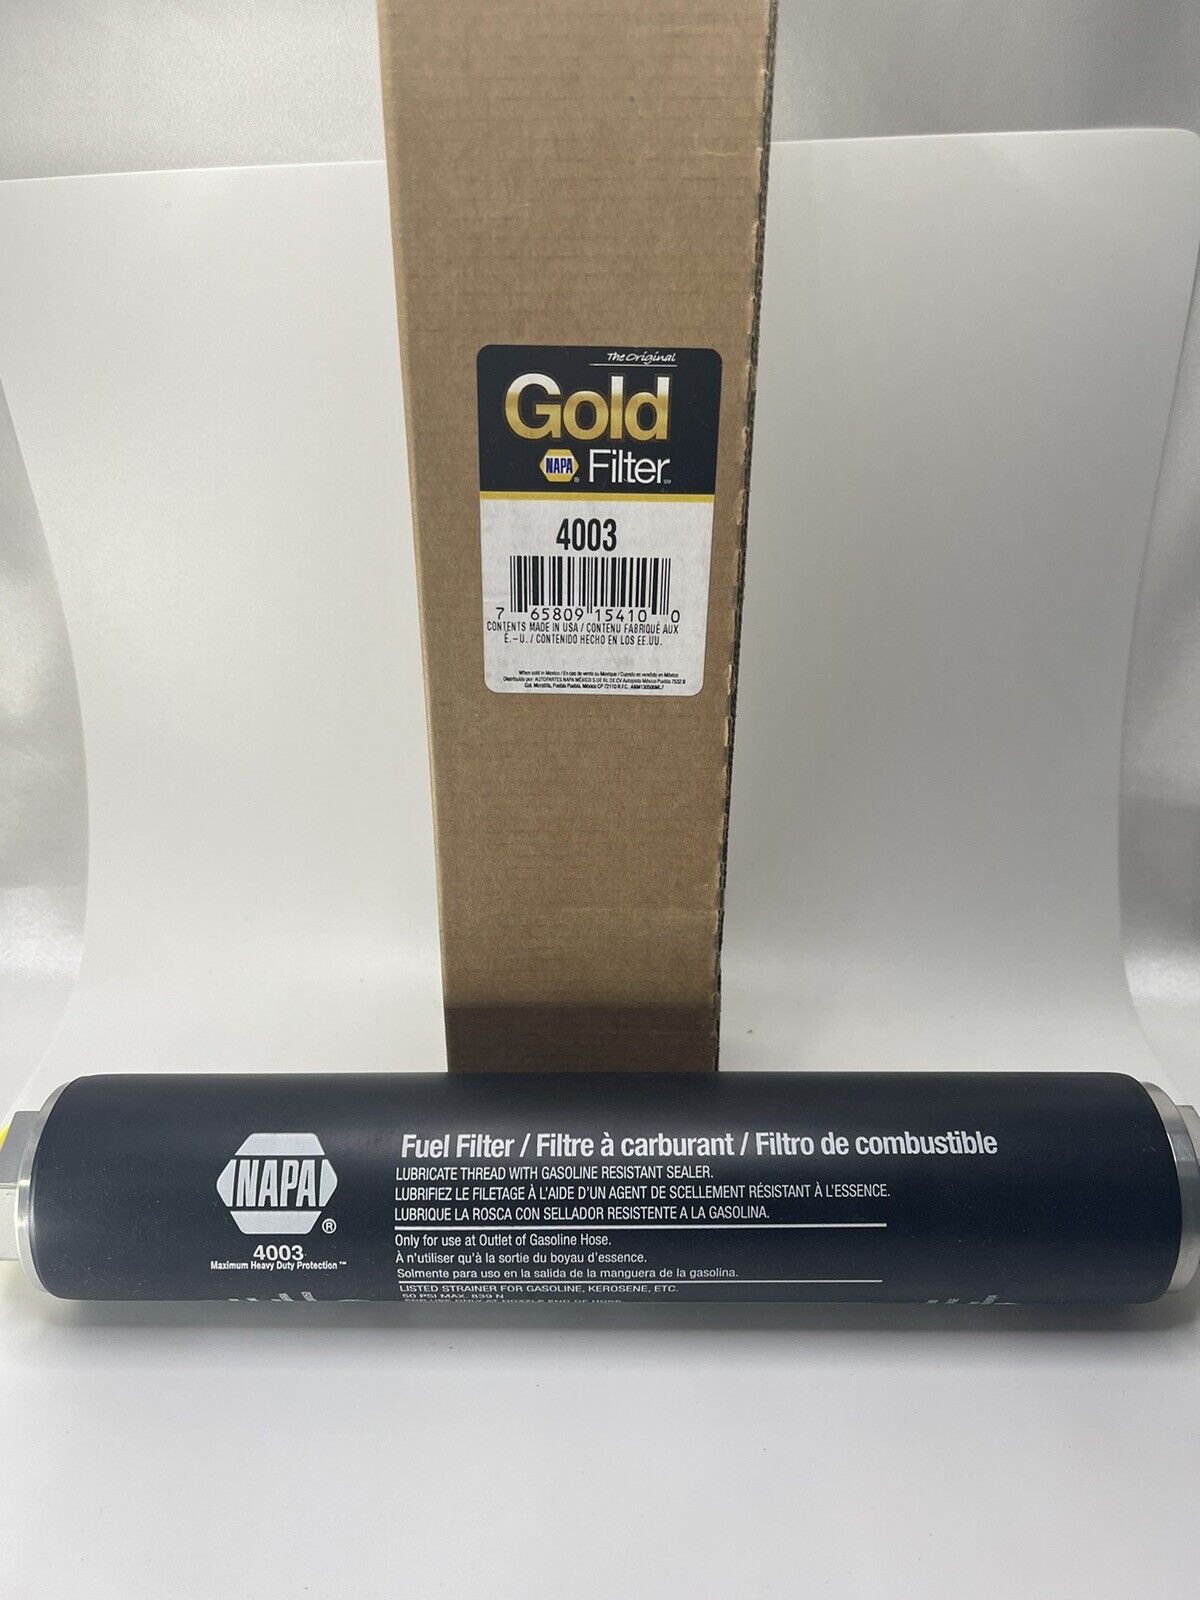 Napa Gold 4003 Fuel Filter